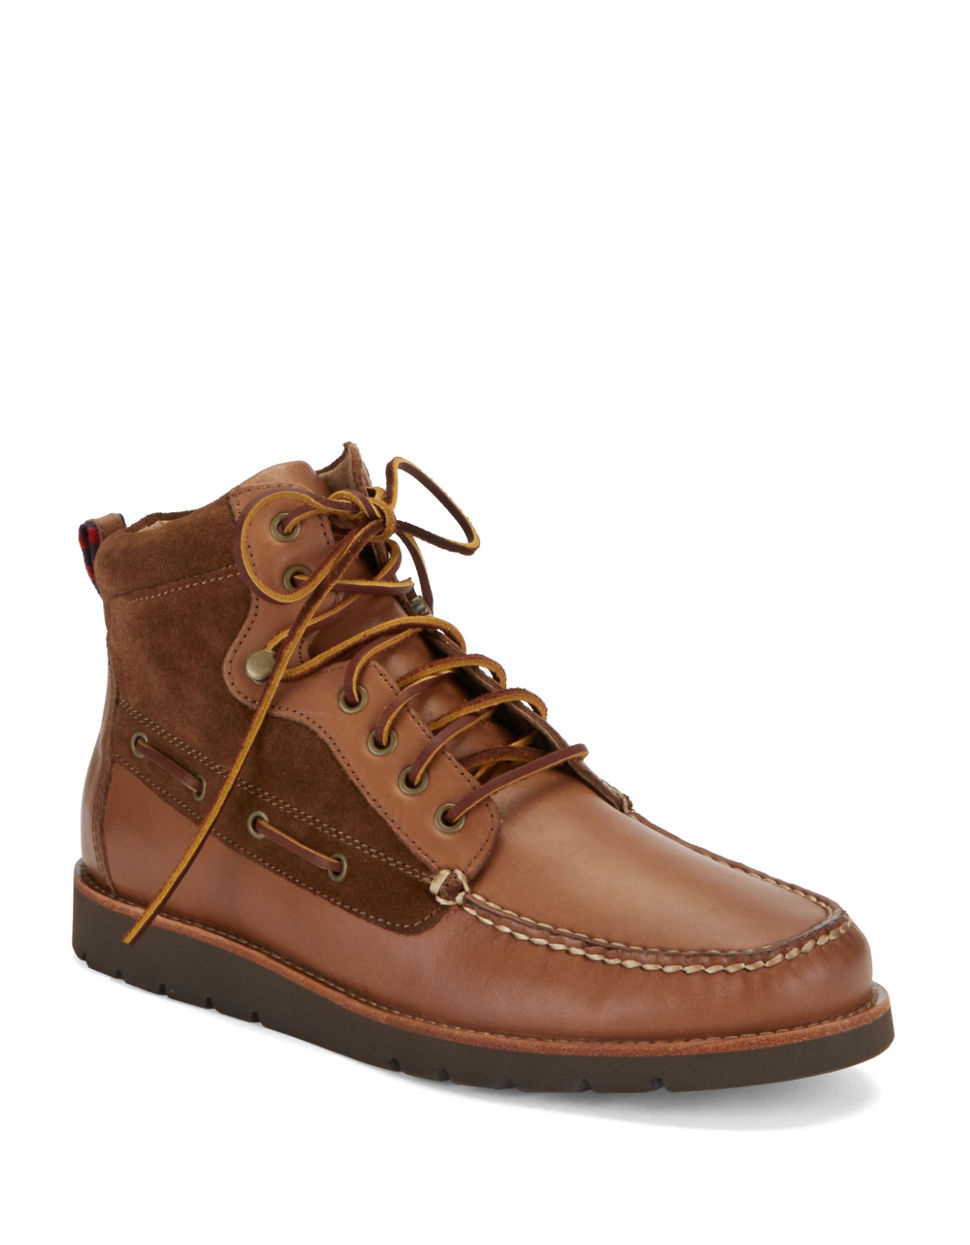 Lyst - Polo ralph lauren Salisbury Leather High Top Boots in Brown for Men